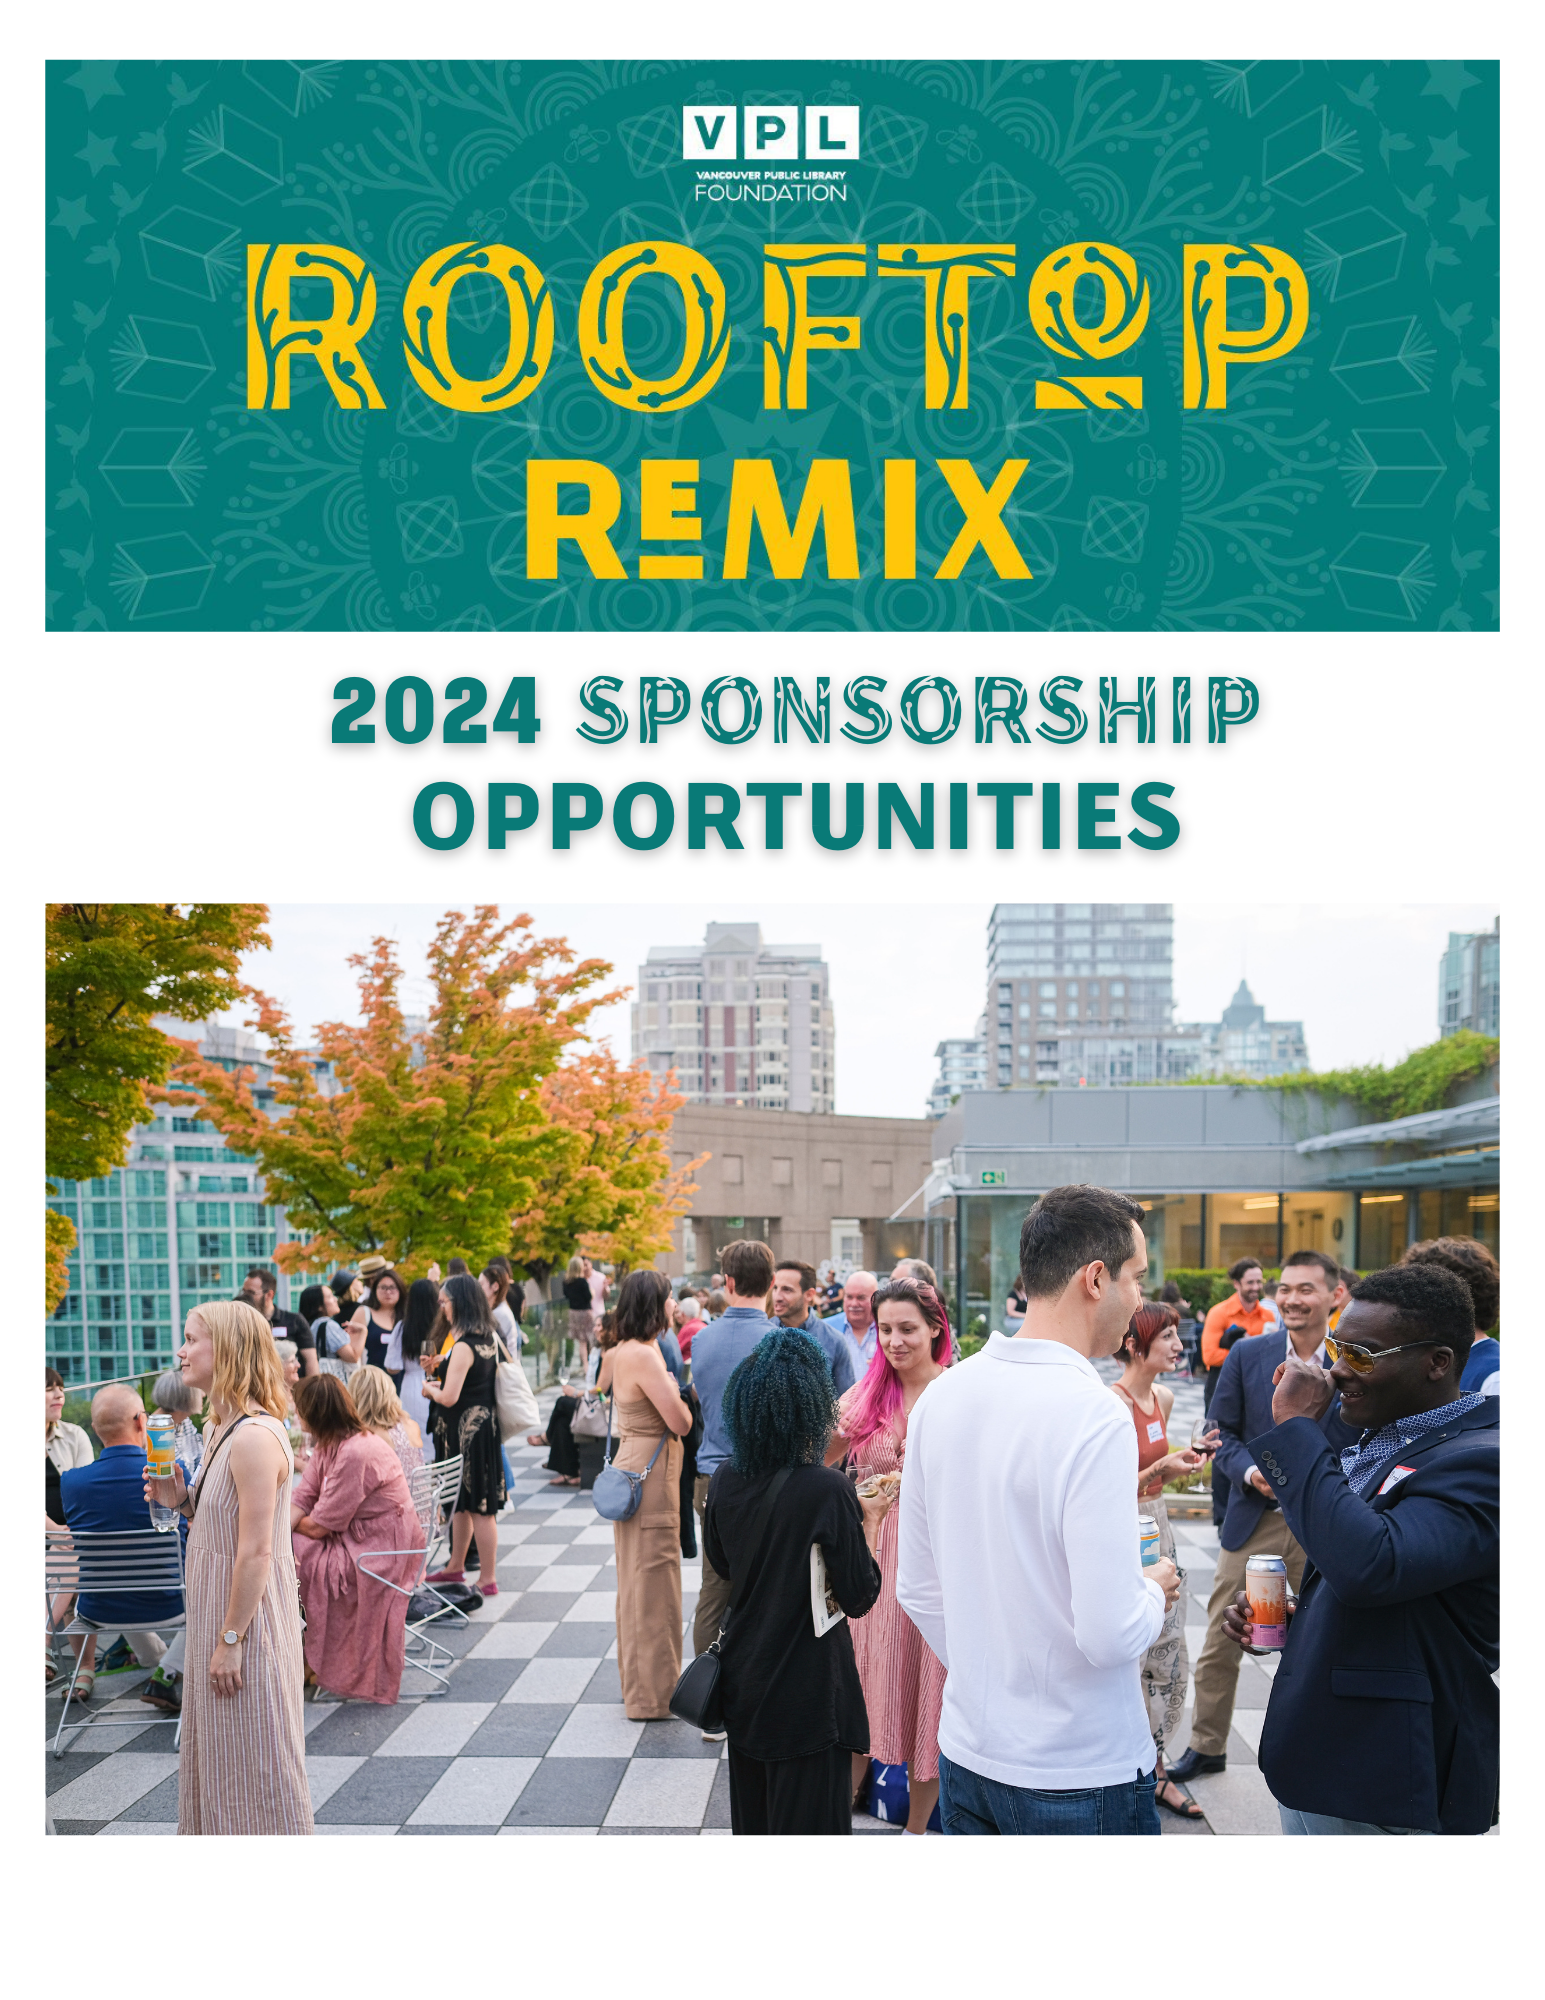 Rooftop Remix 2024 Sponsorship Opportunities